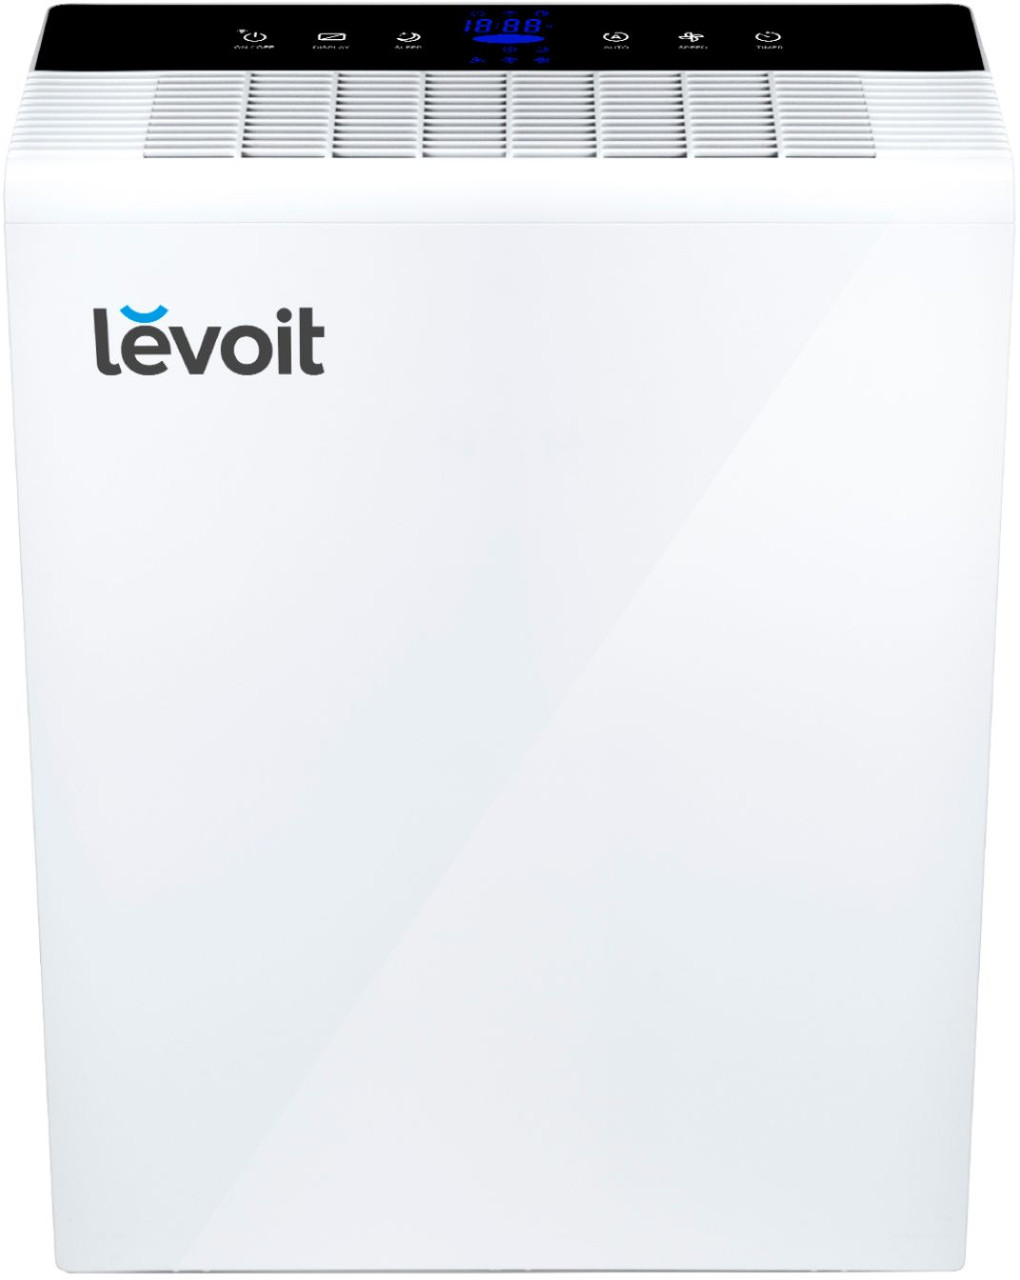 Levoit - 361 Sq. Ft Smart Air Purifier - White